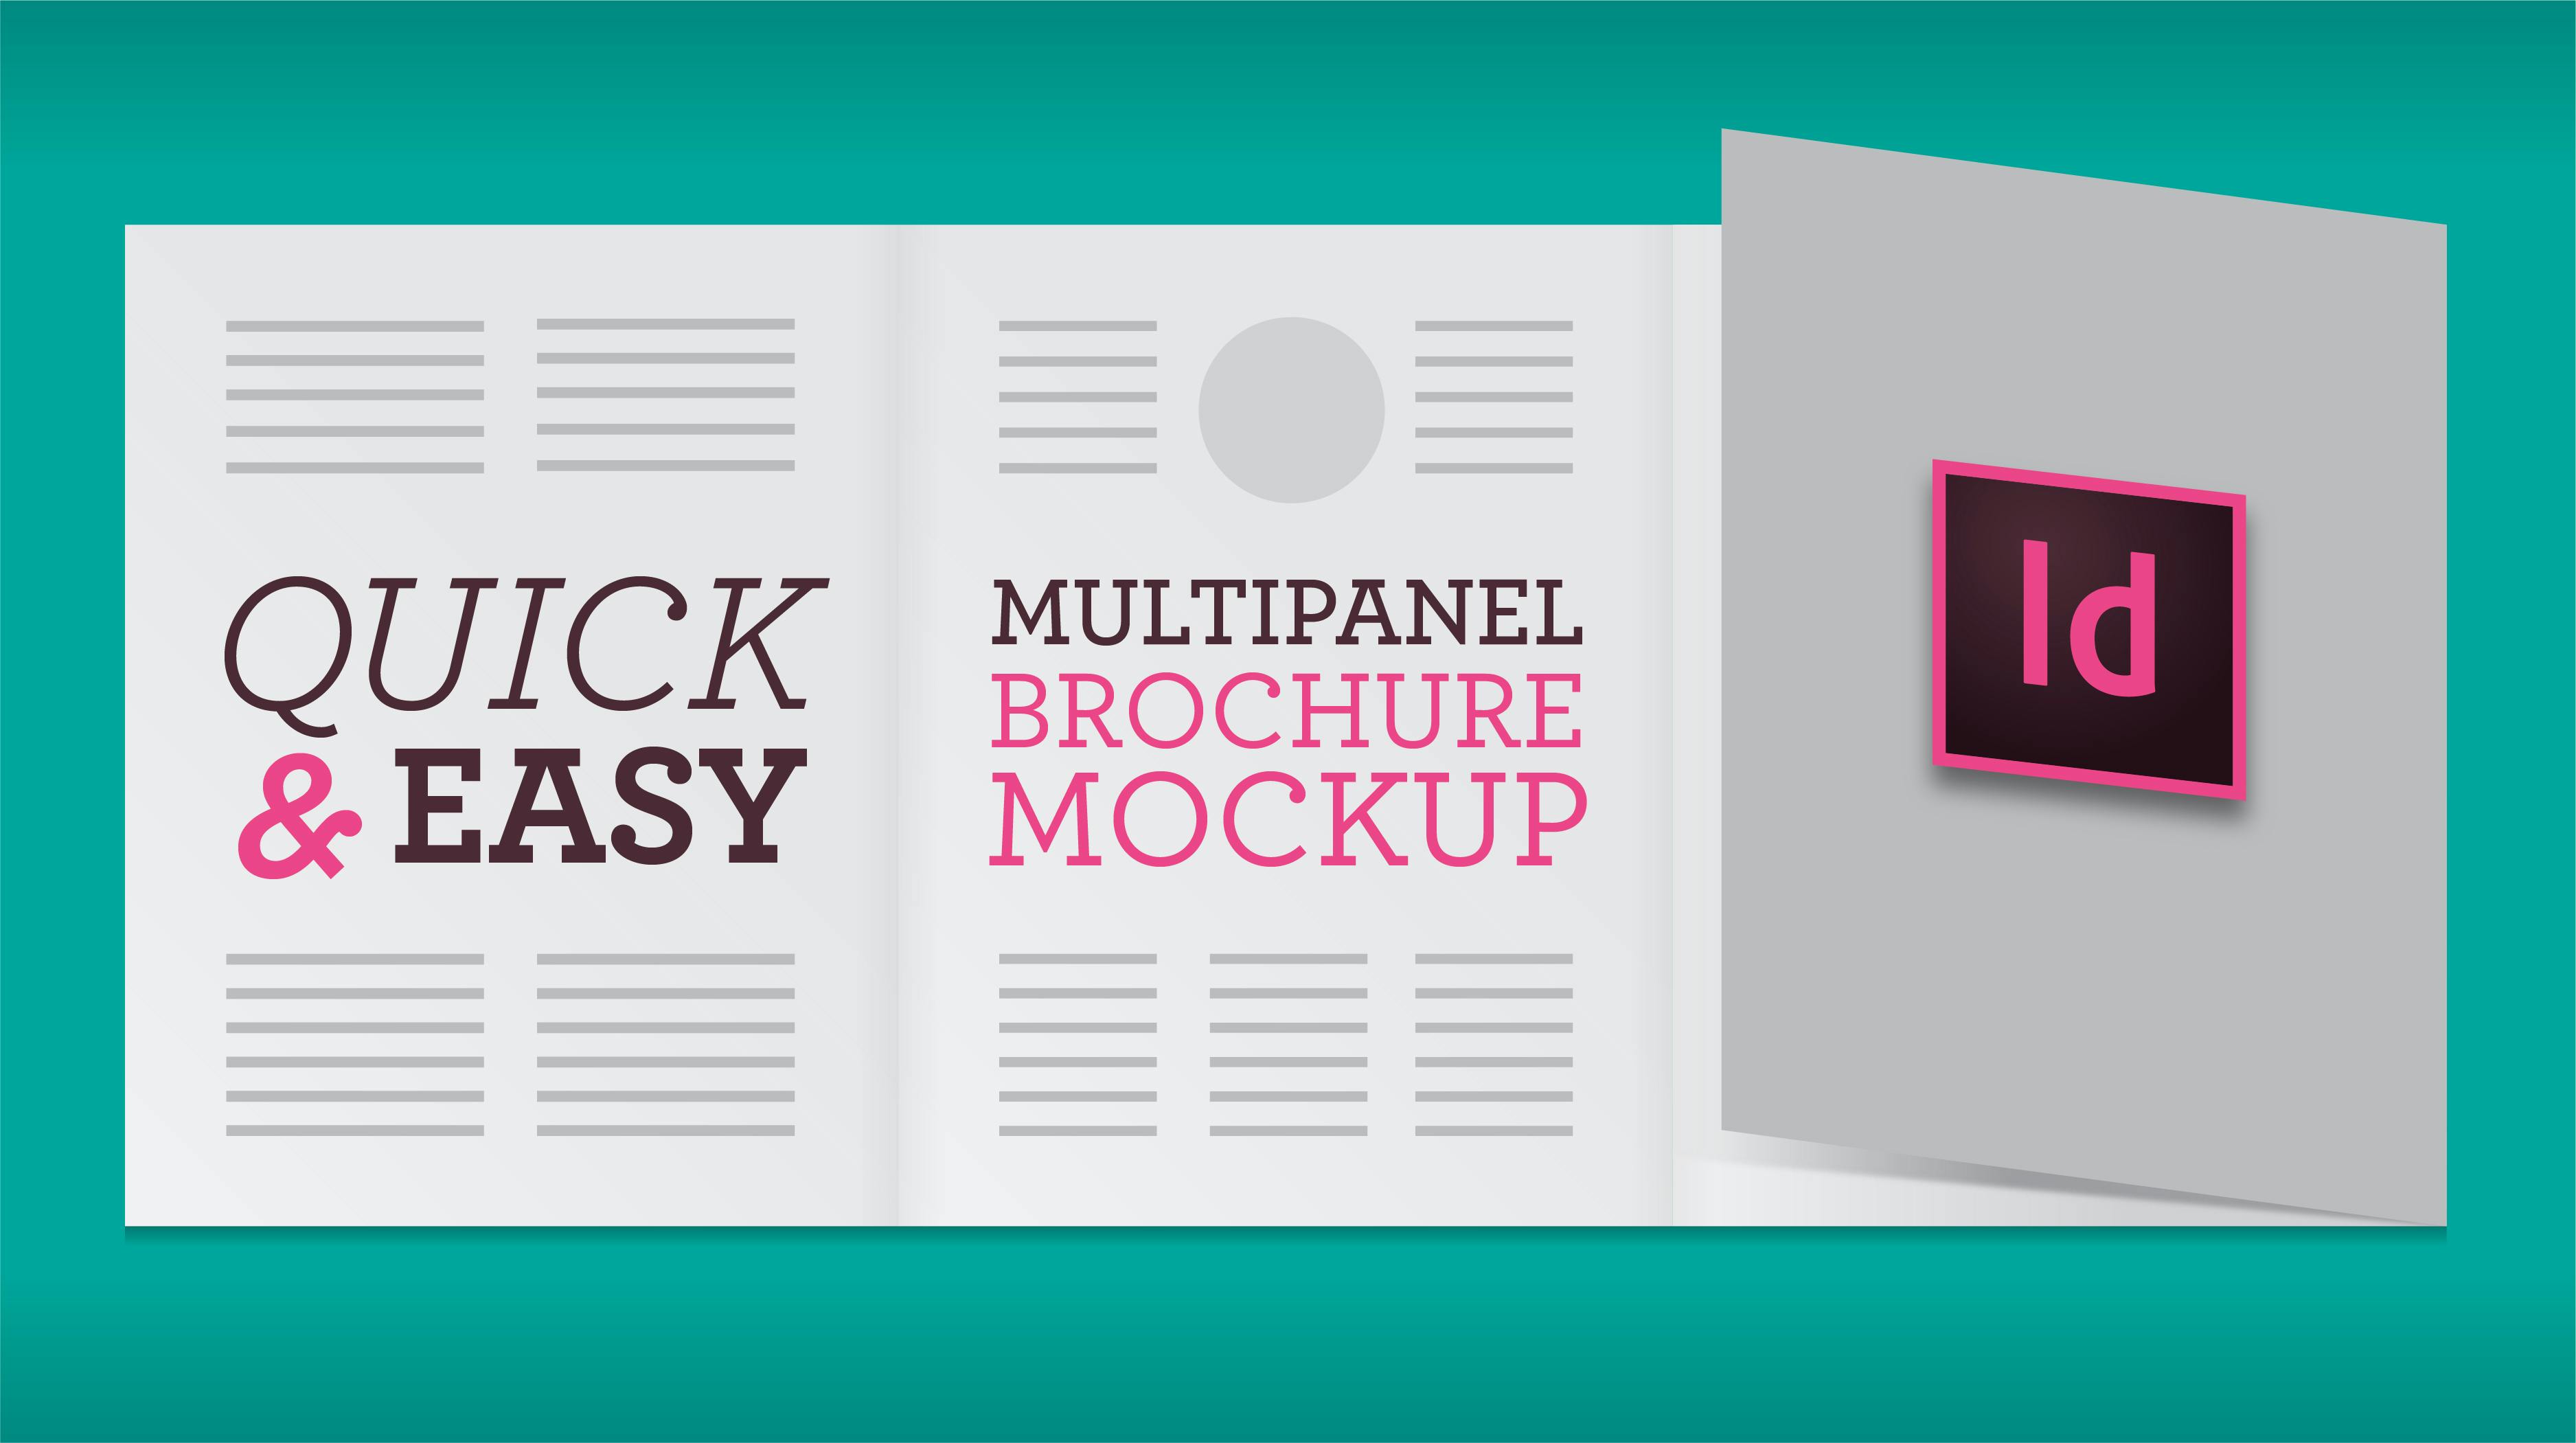 Quick, Easy Multipanel Brochure Mockup (InDesign)